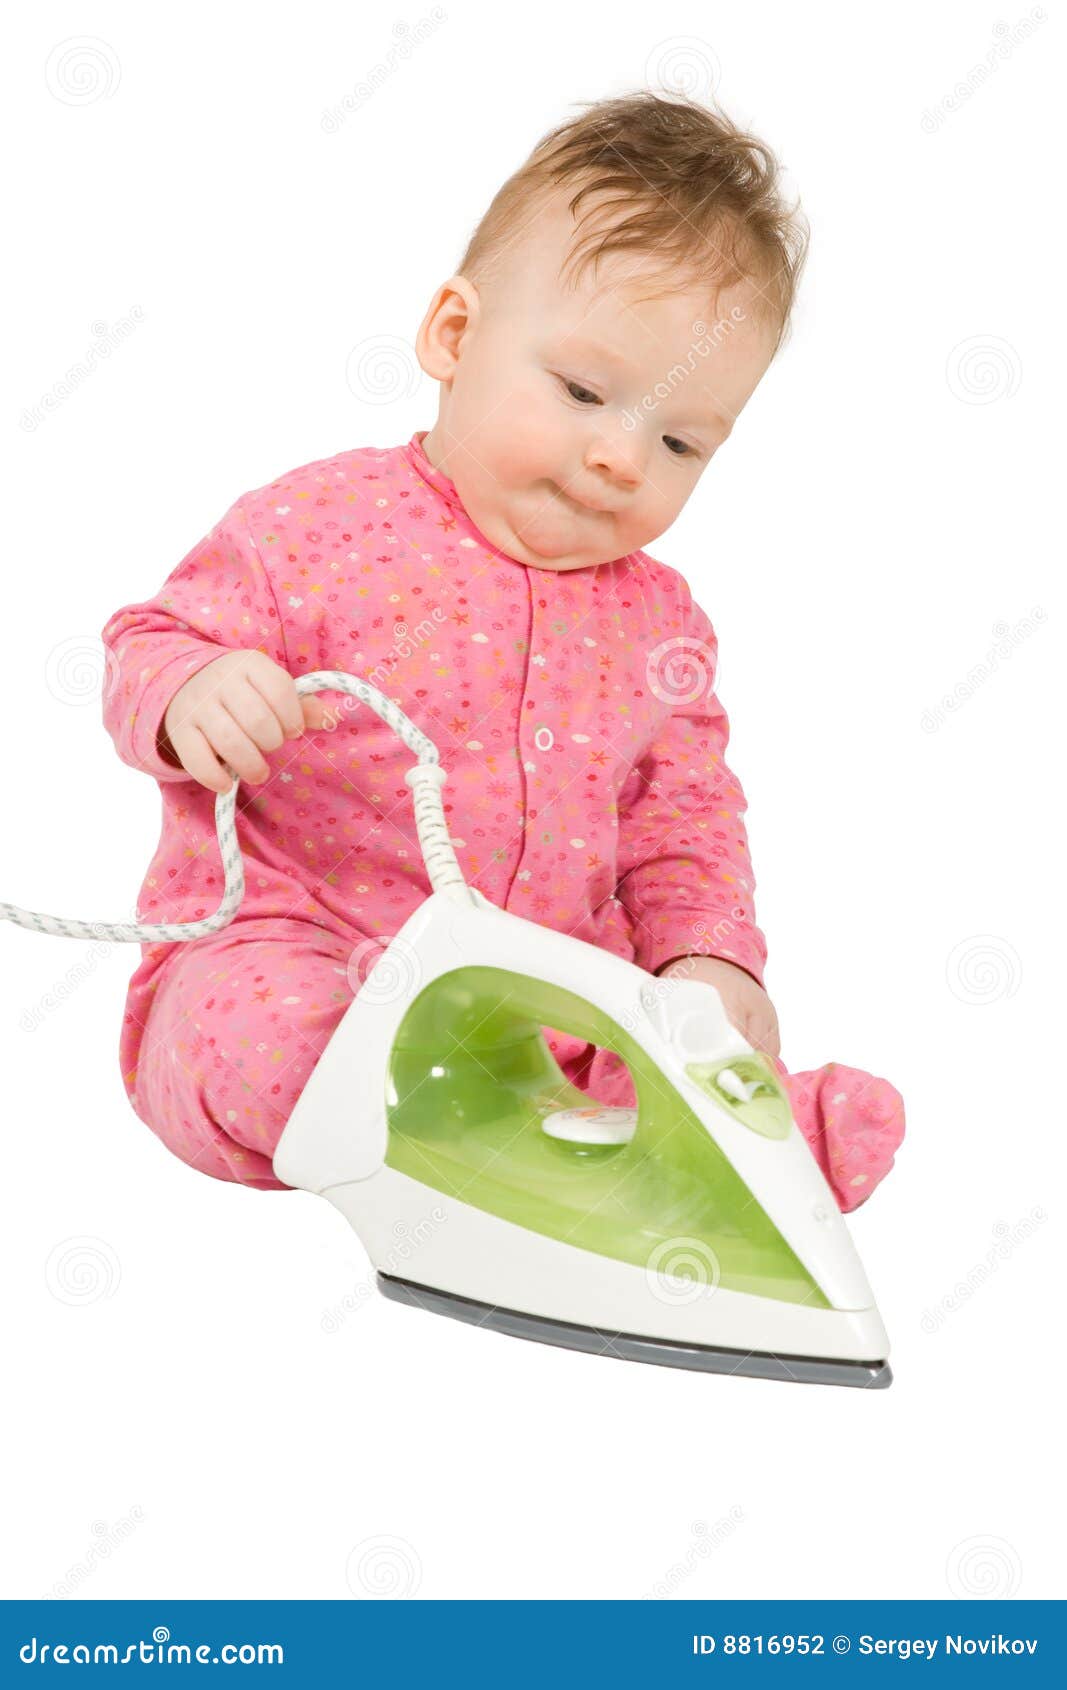 toddler playing with smoothing iron